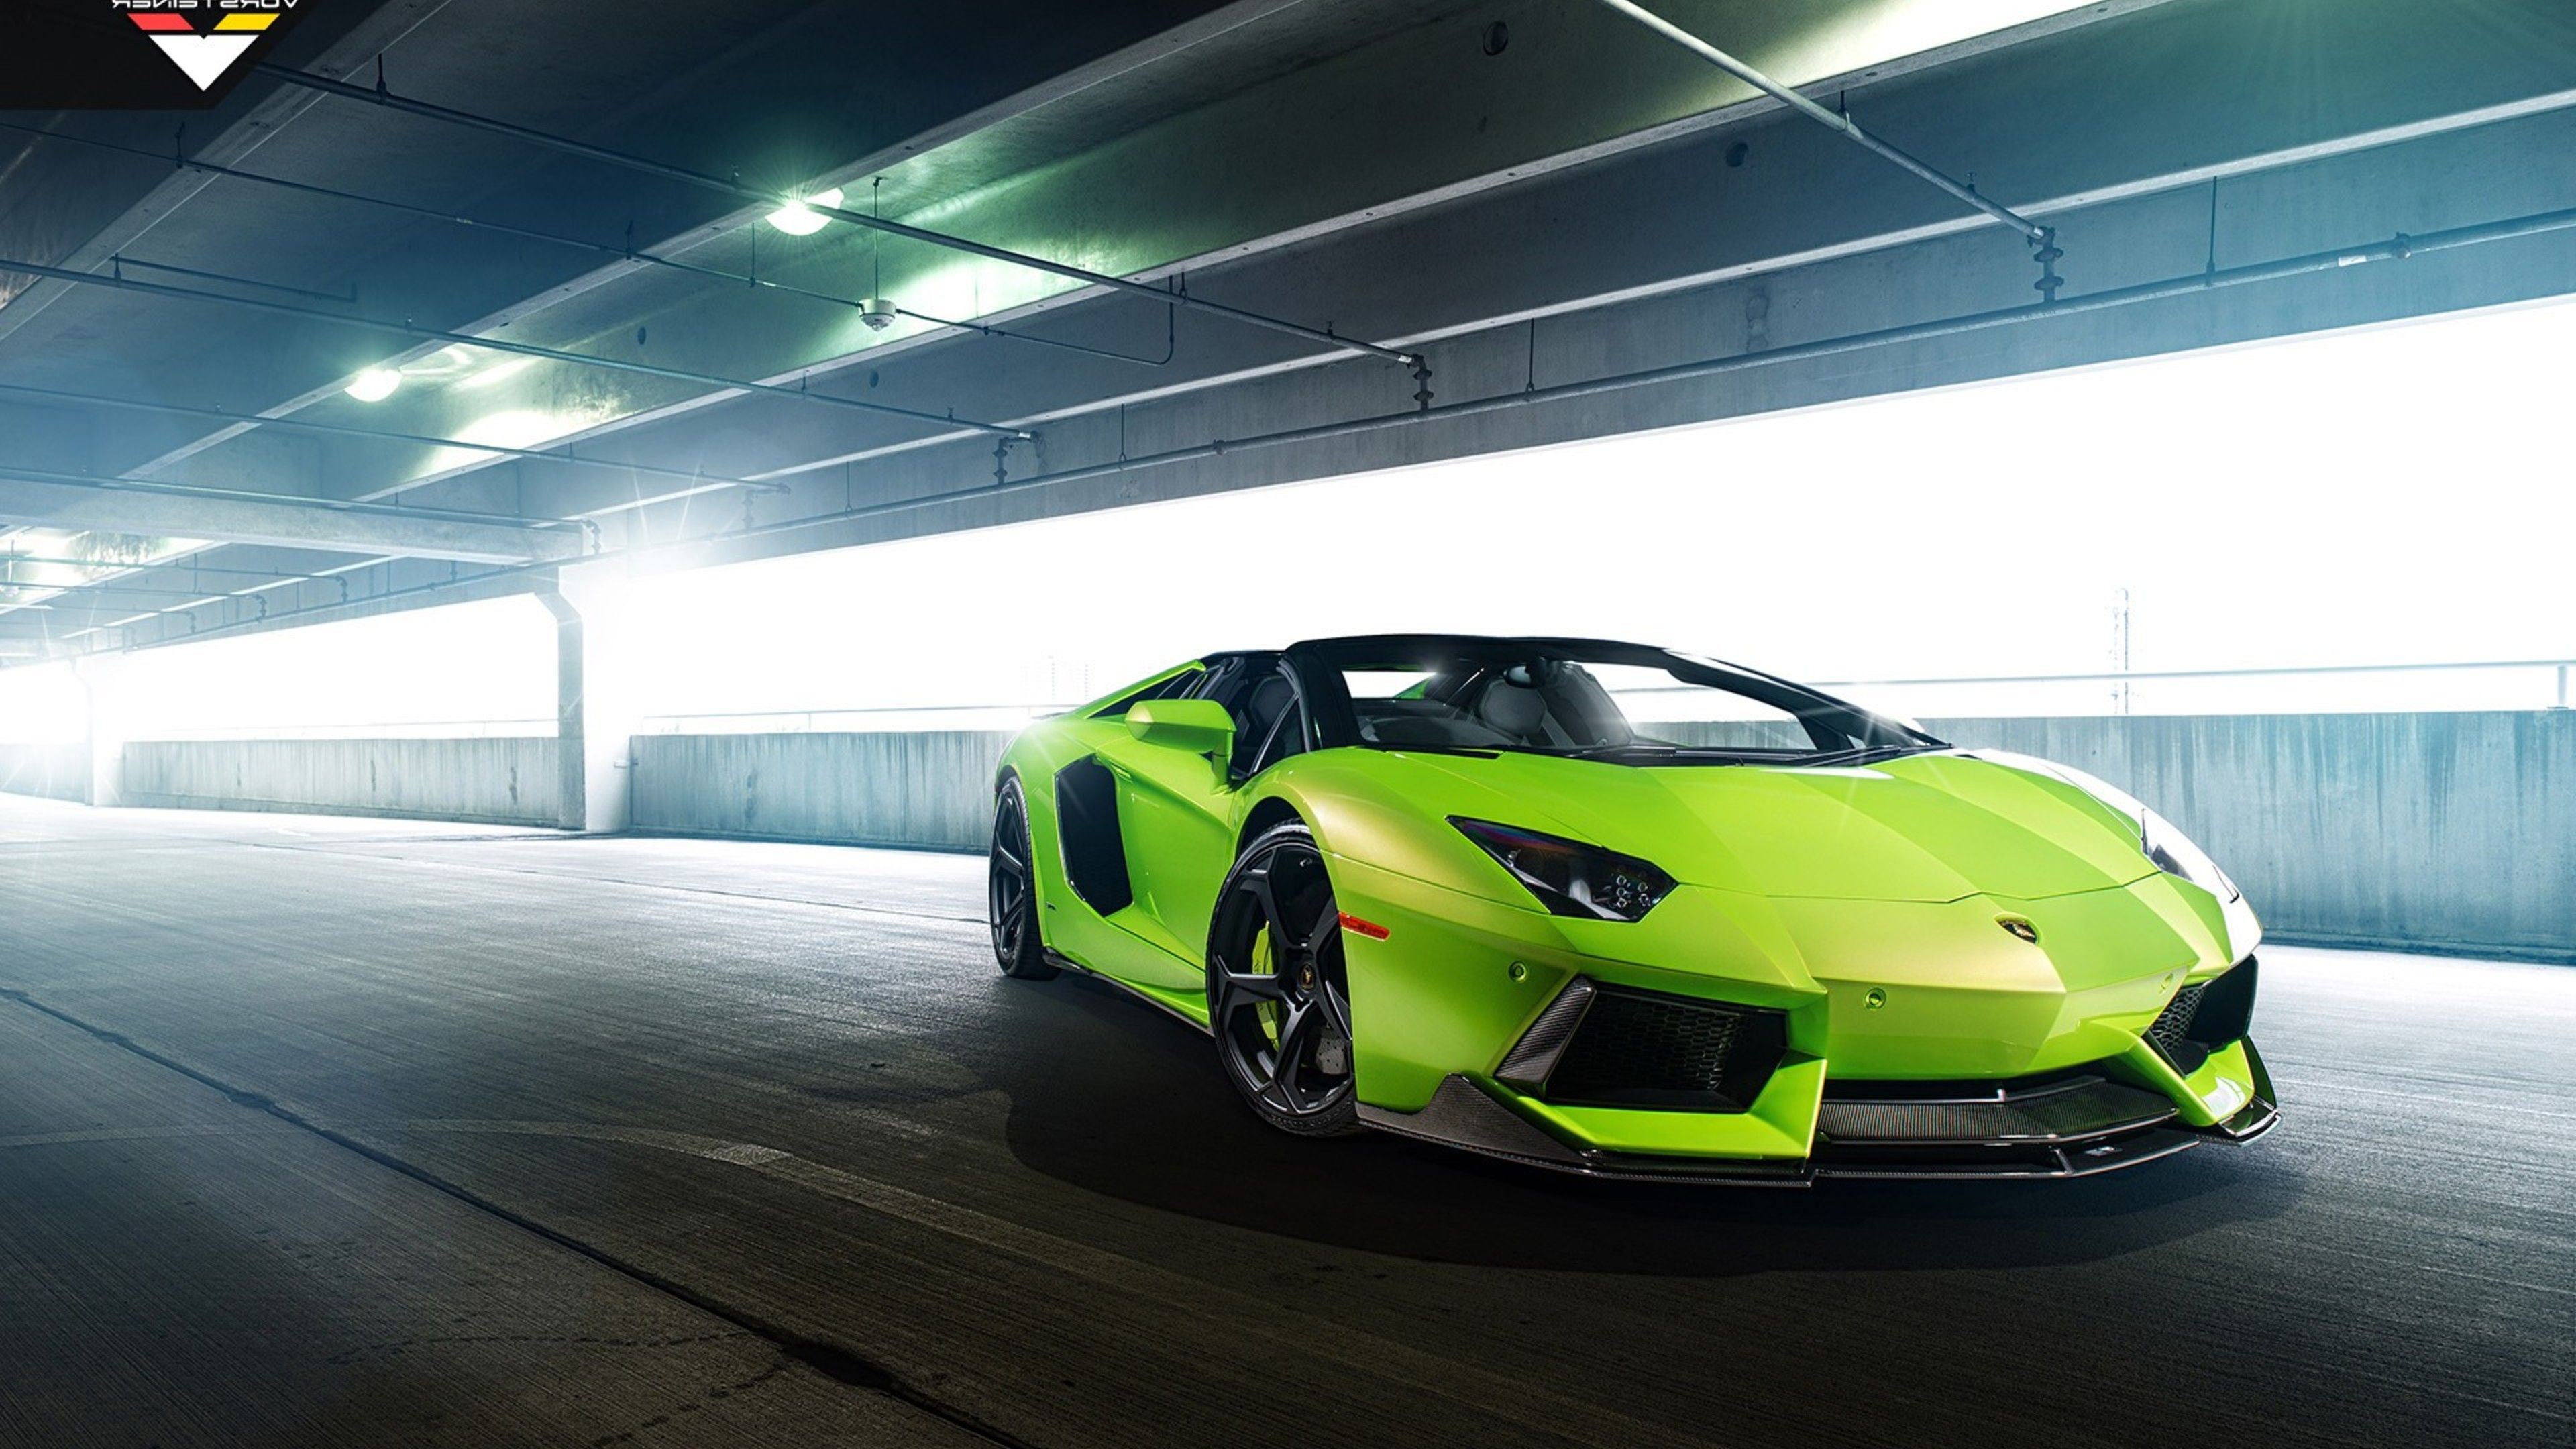 Lamborghini Green, HD Cars, 4k Wallpaper, Image, Background, Photo and Picture